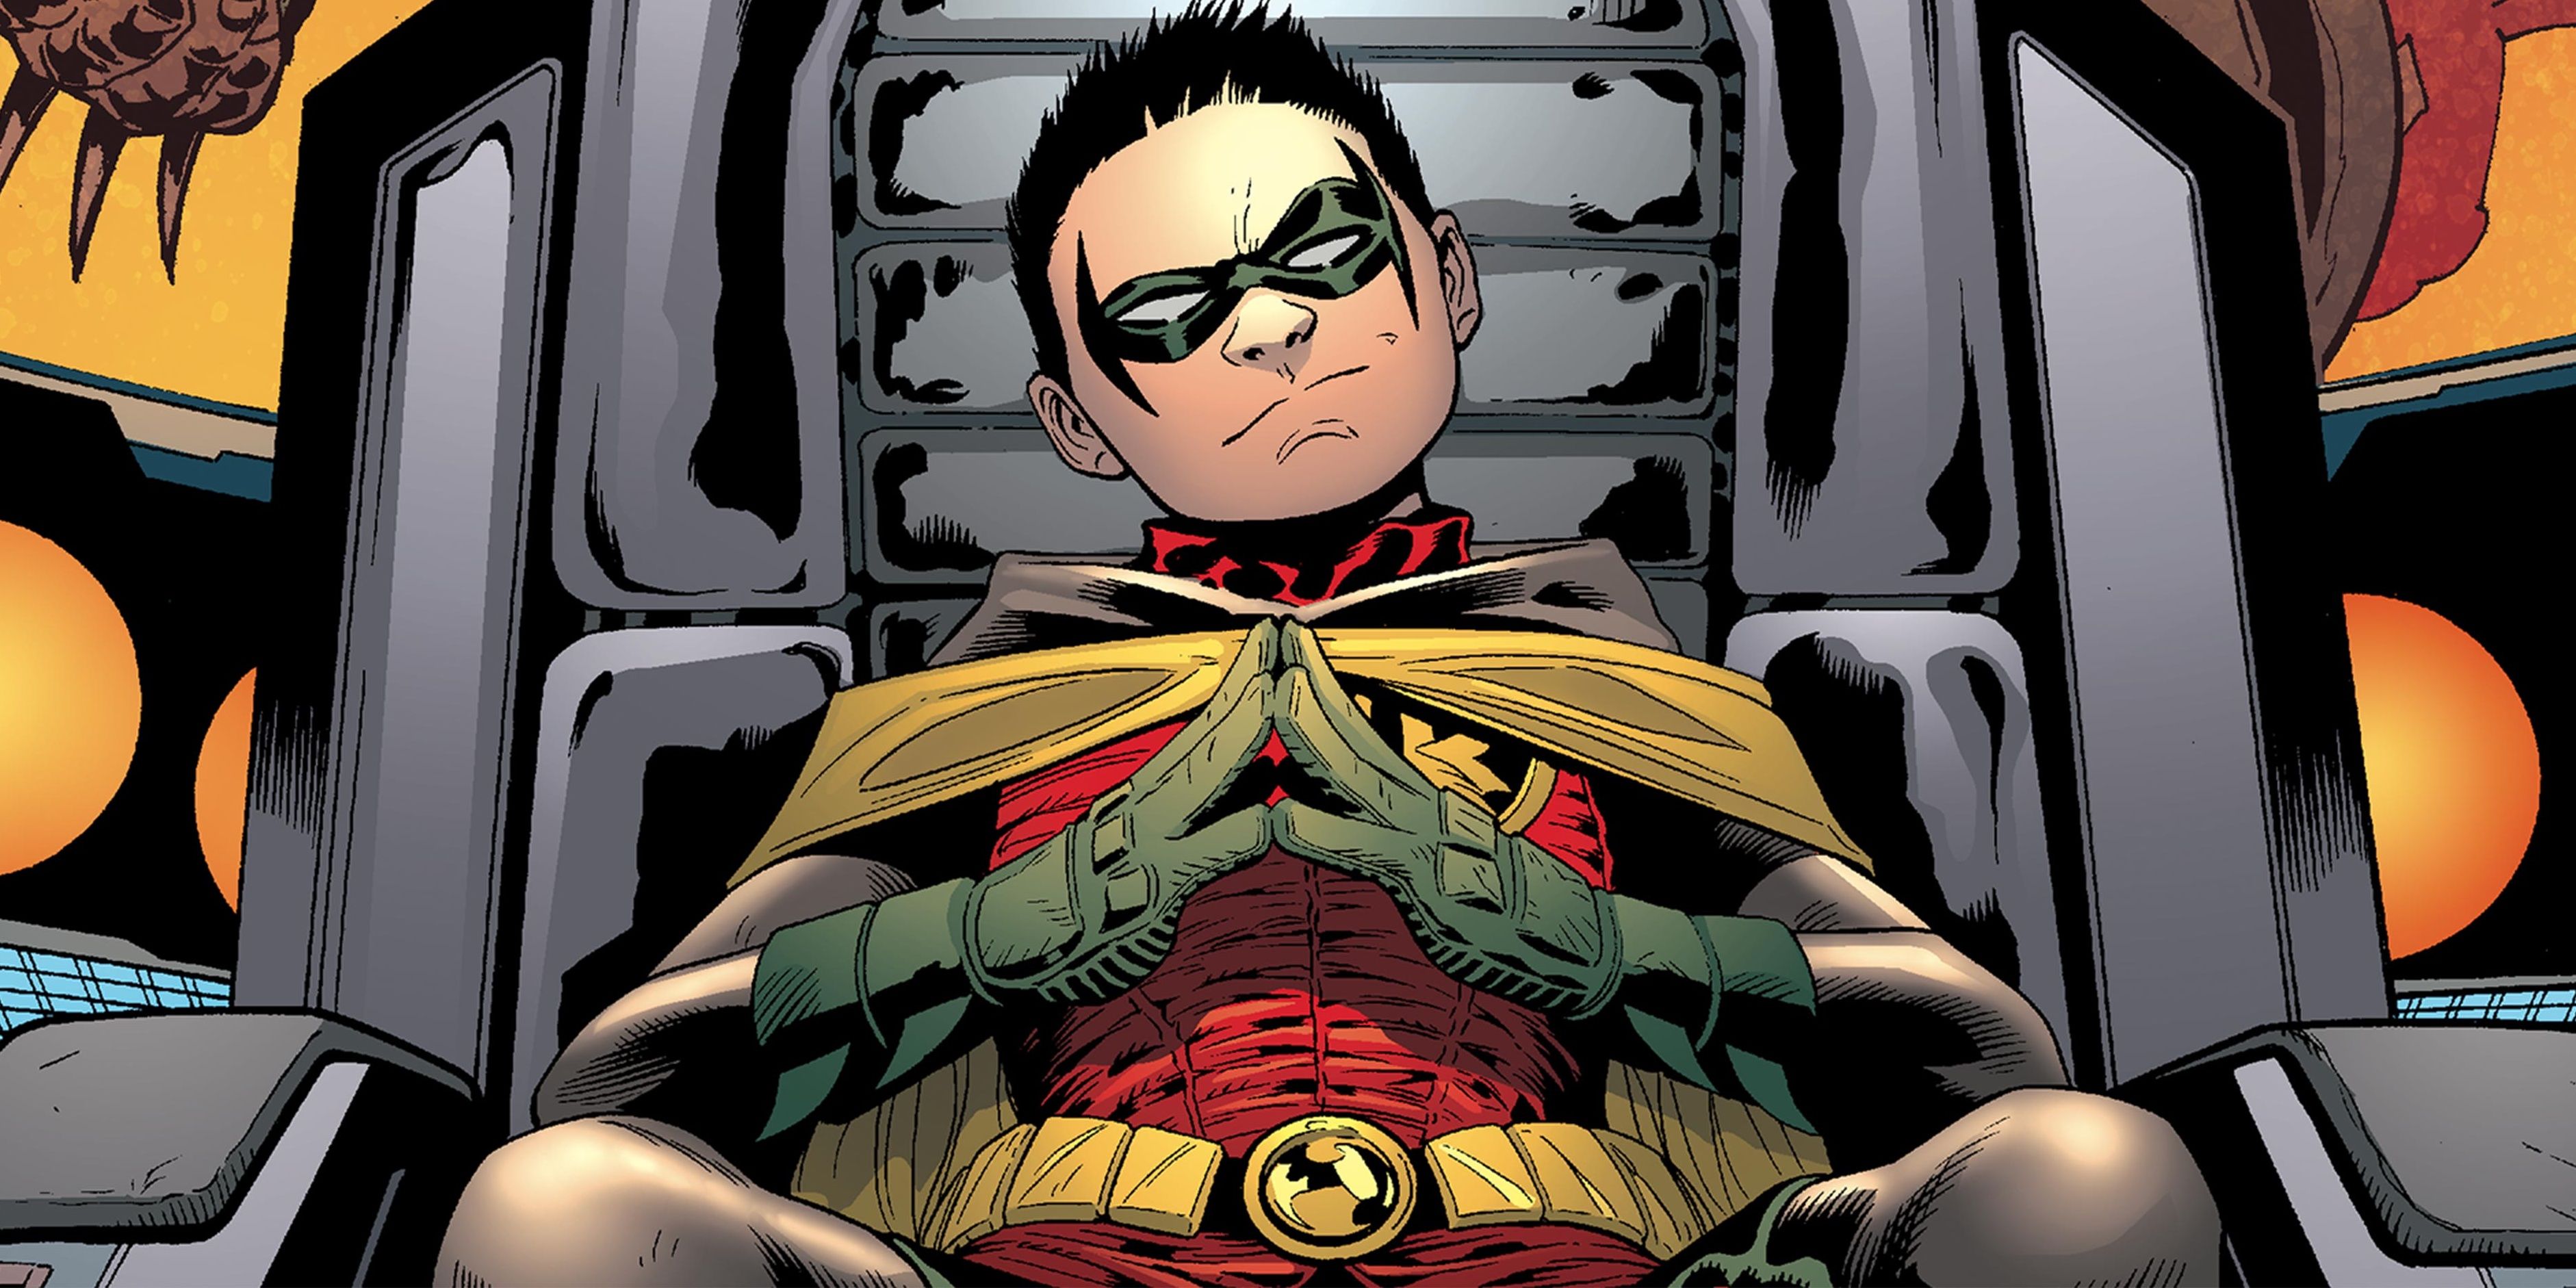 Damian Wayne sitting on a chair in the comics